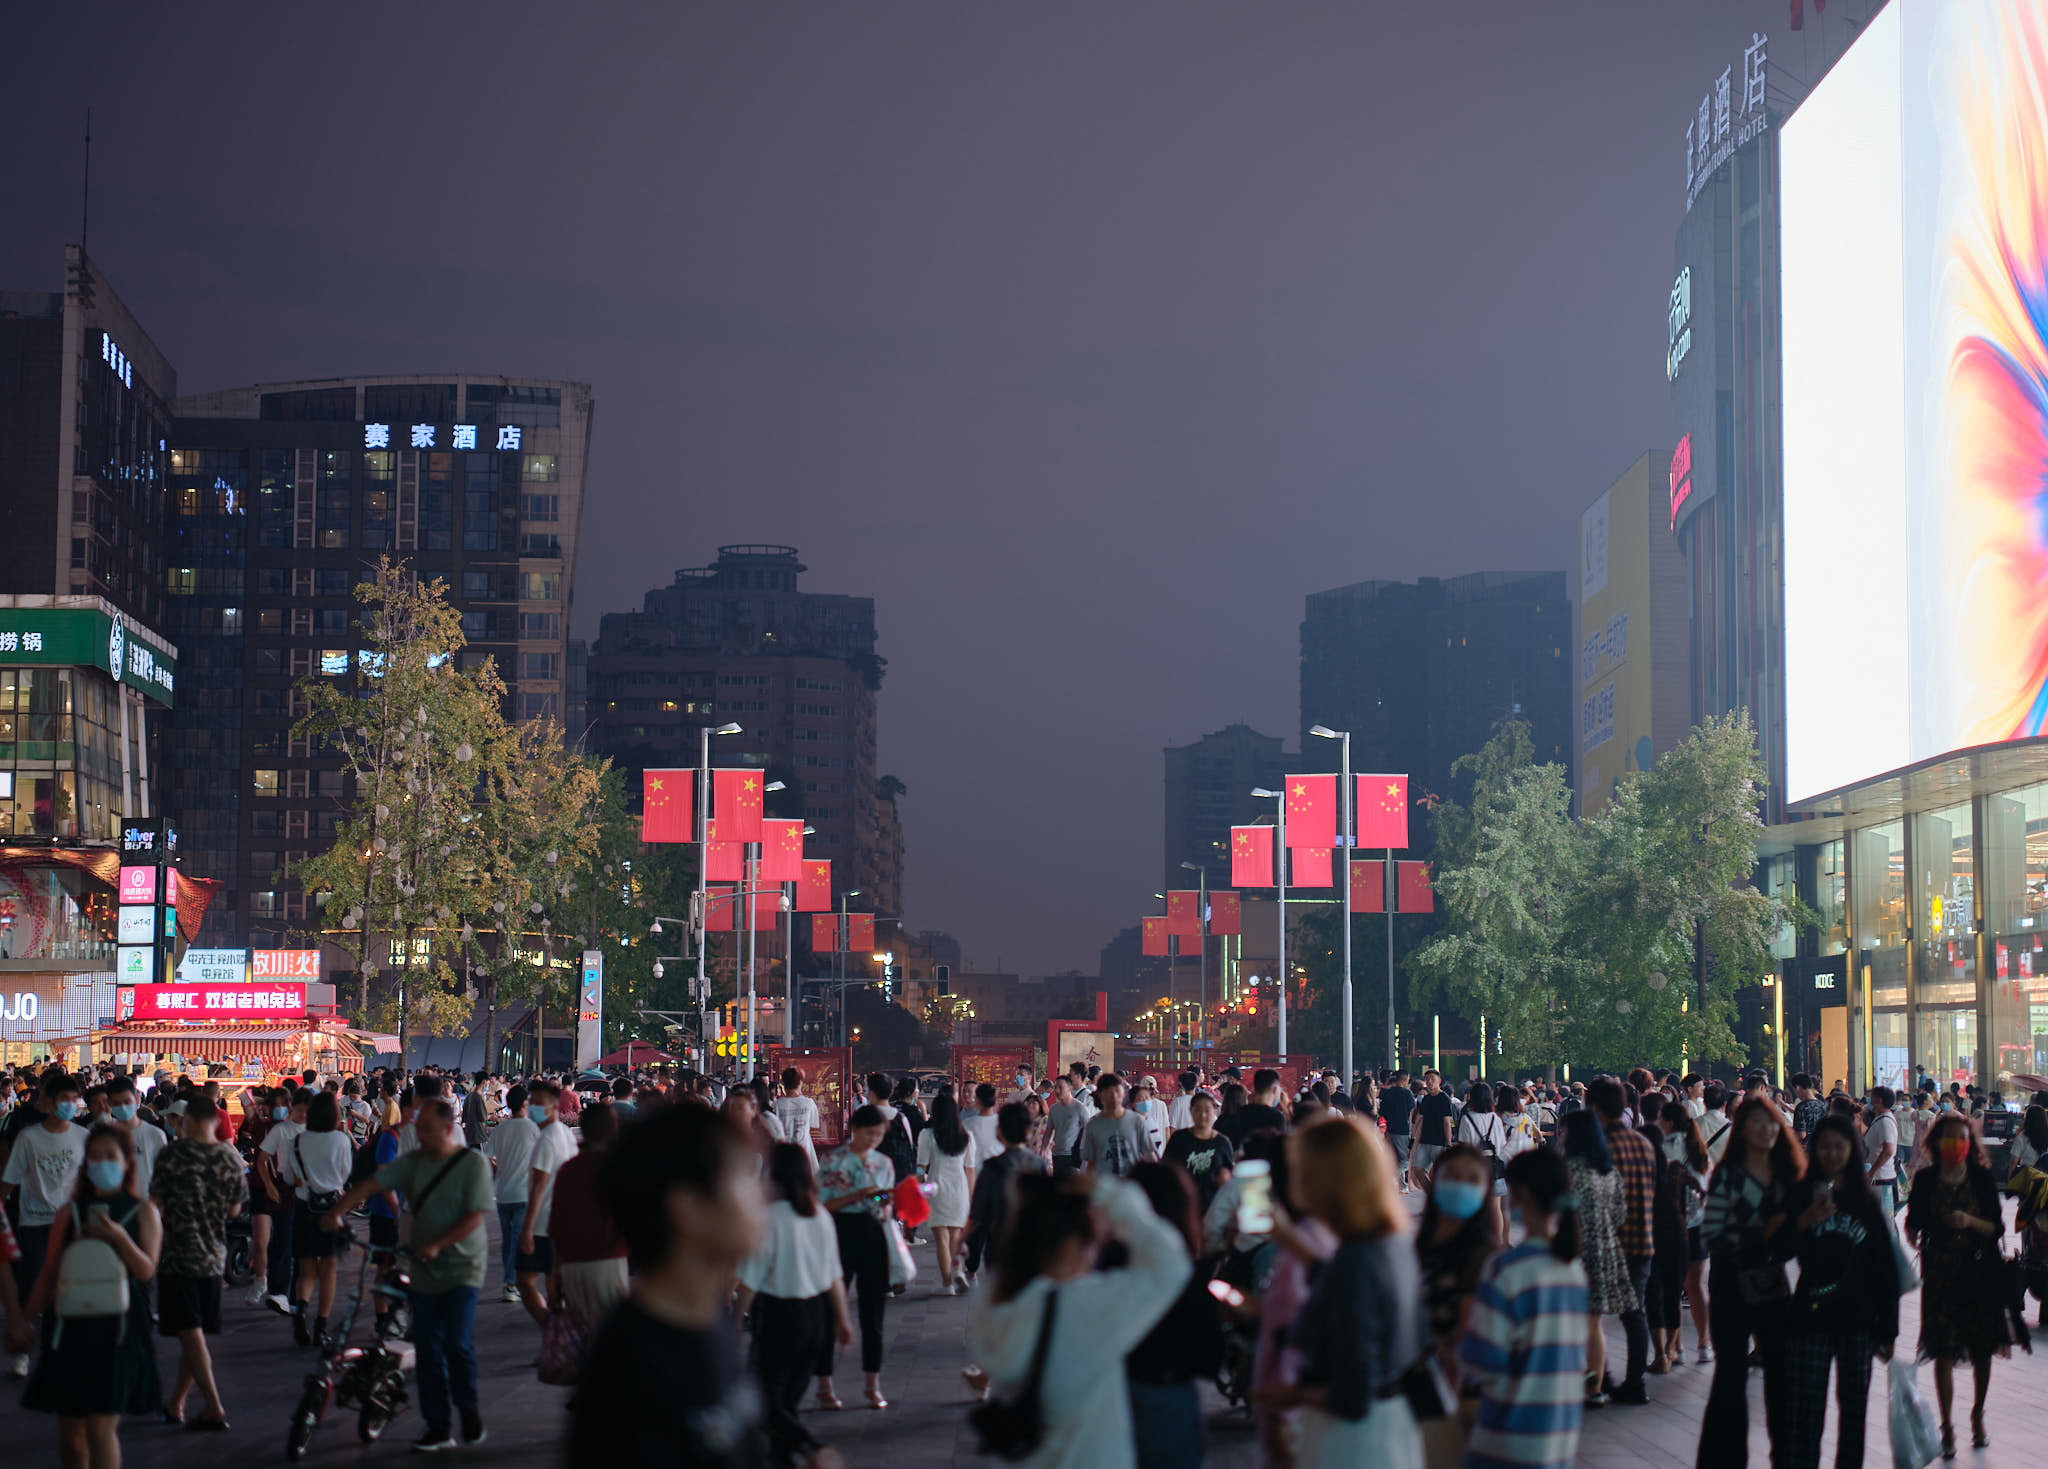 Hoards of people at Chunxi Pedestrian street during Golden Week